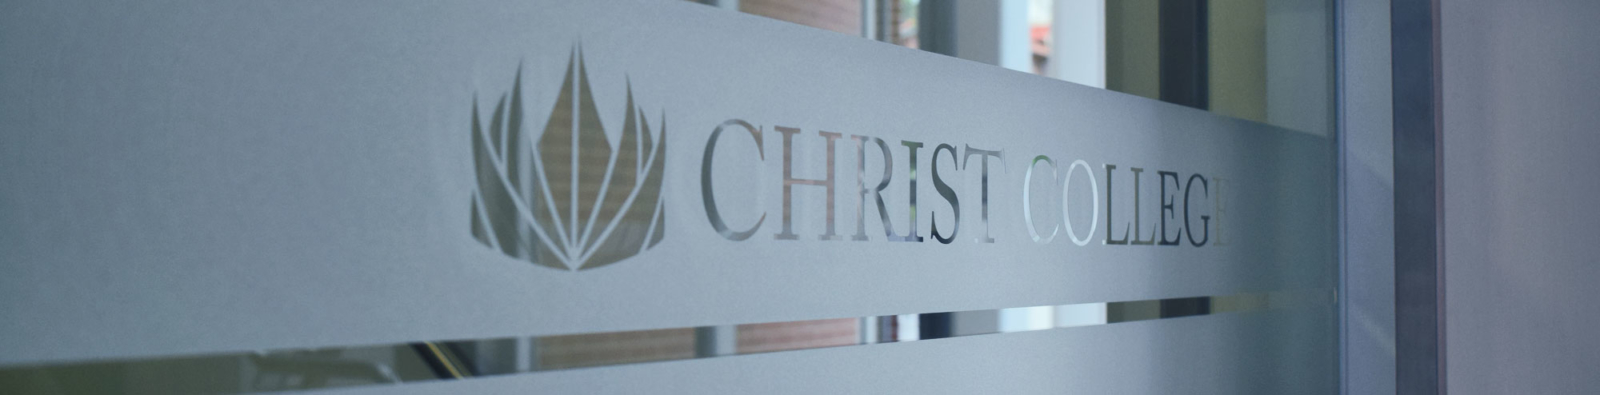 Christ College New Zealand 